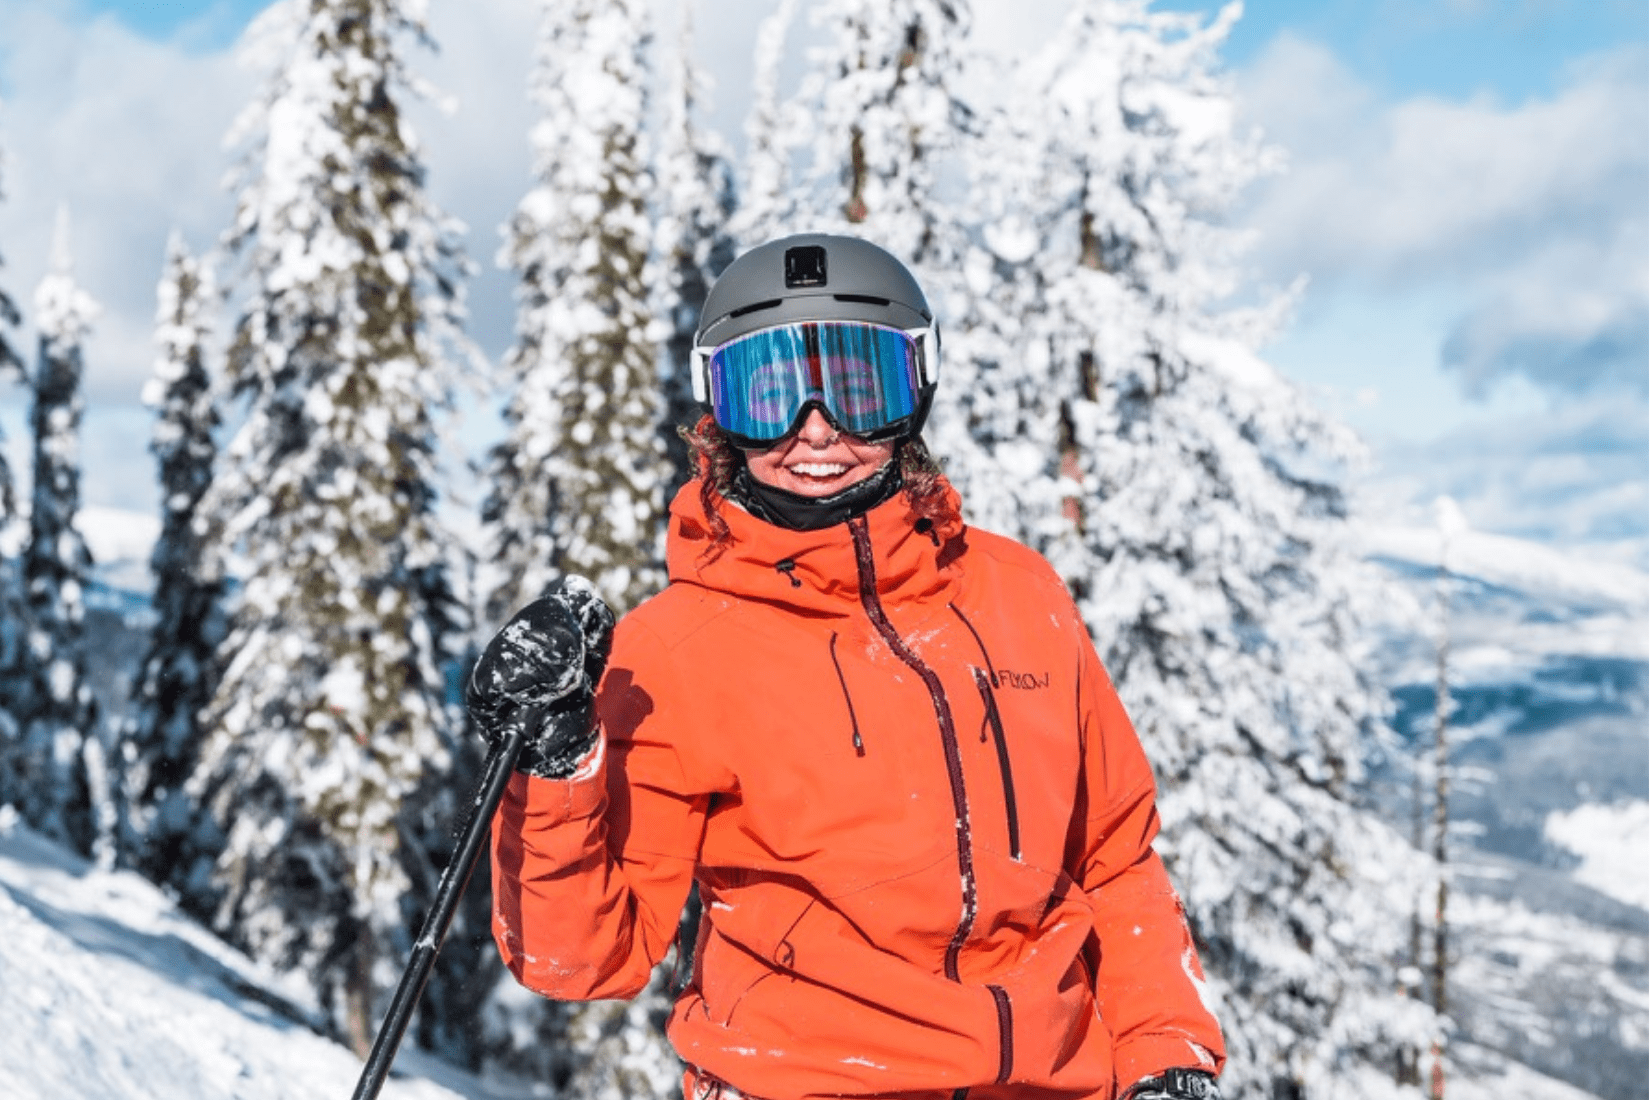 A woman wearing ski gear on a mountain smiling.